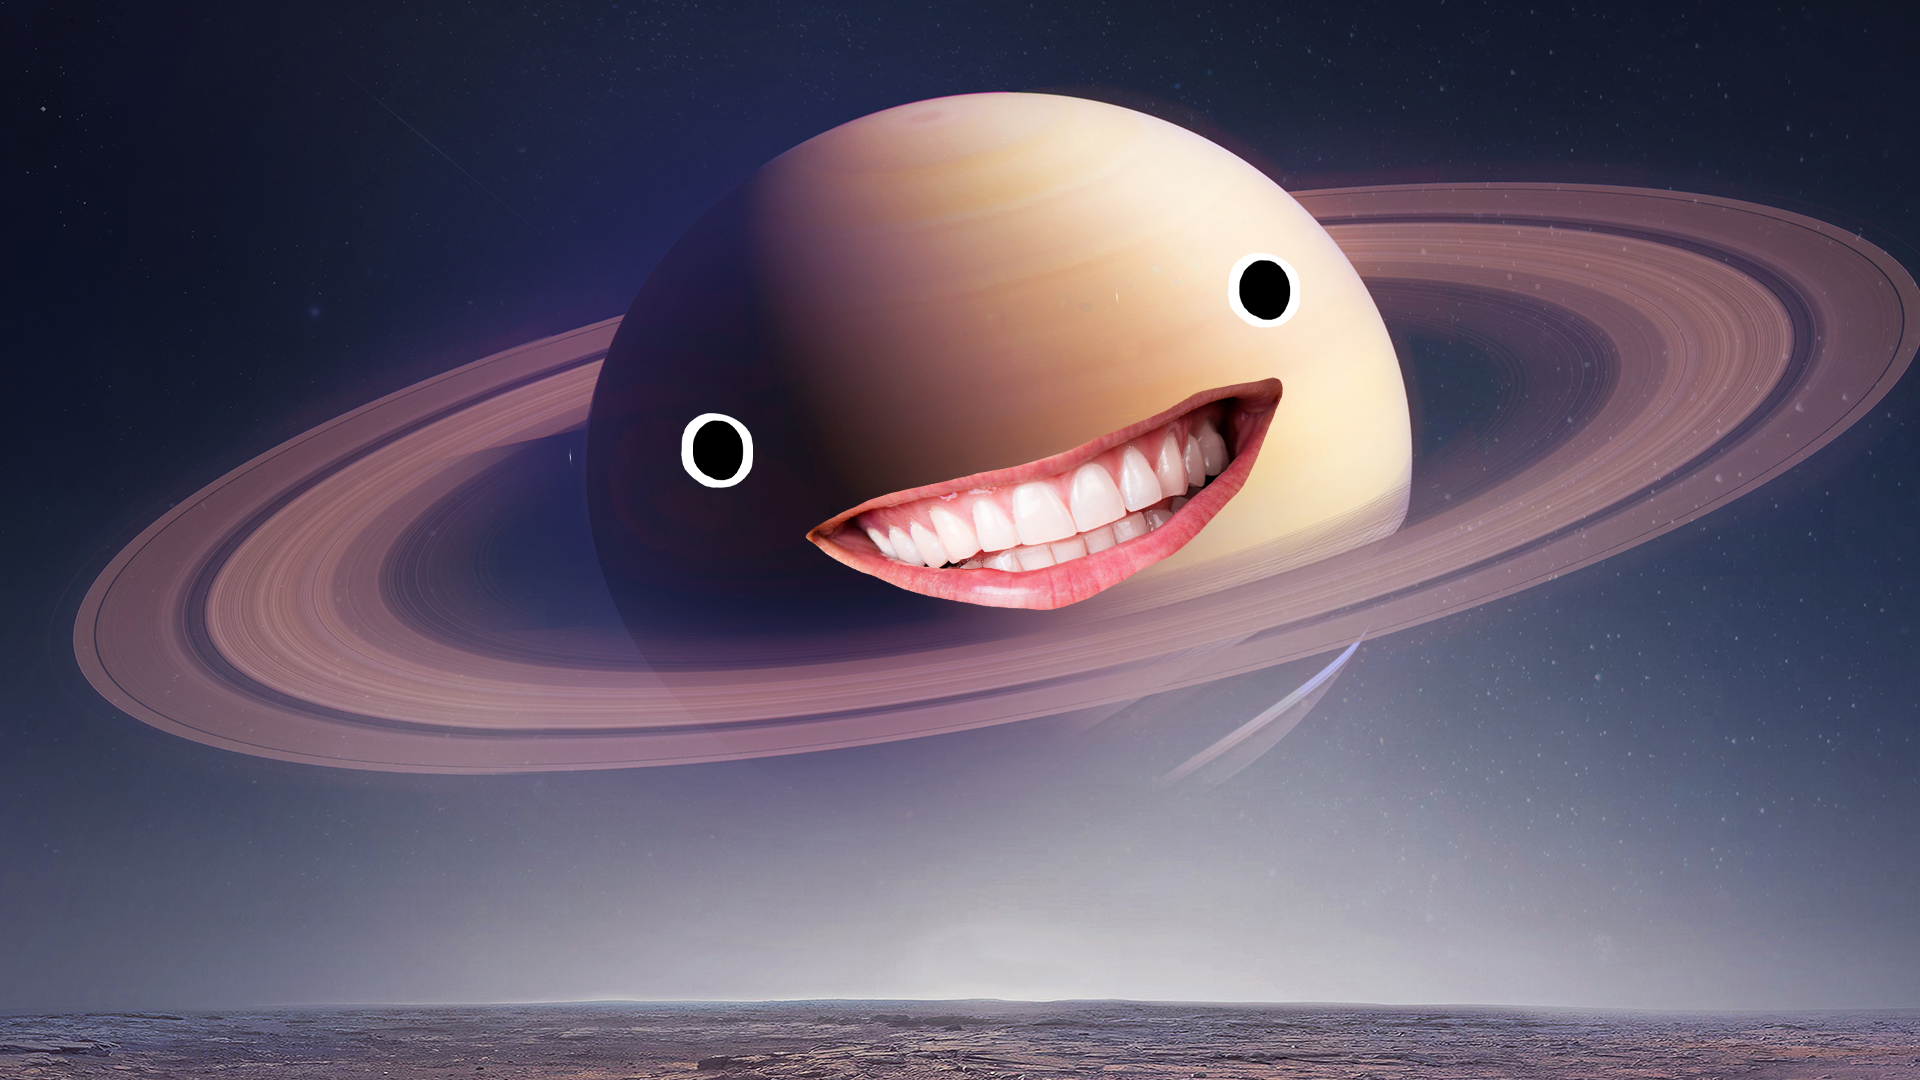 Goofy smiling planet